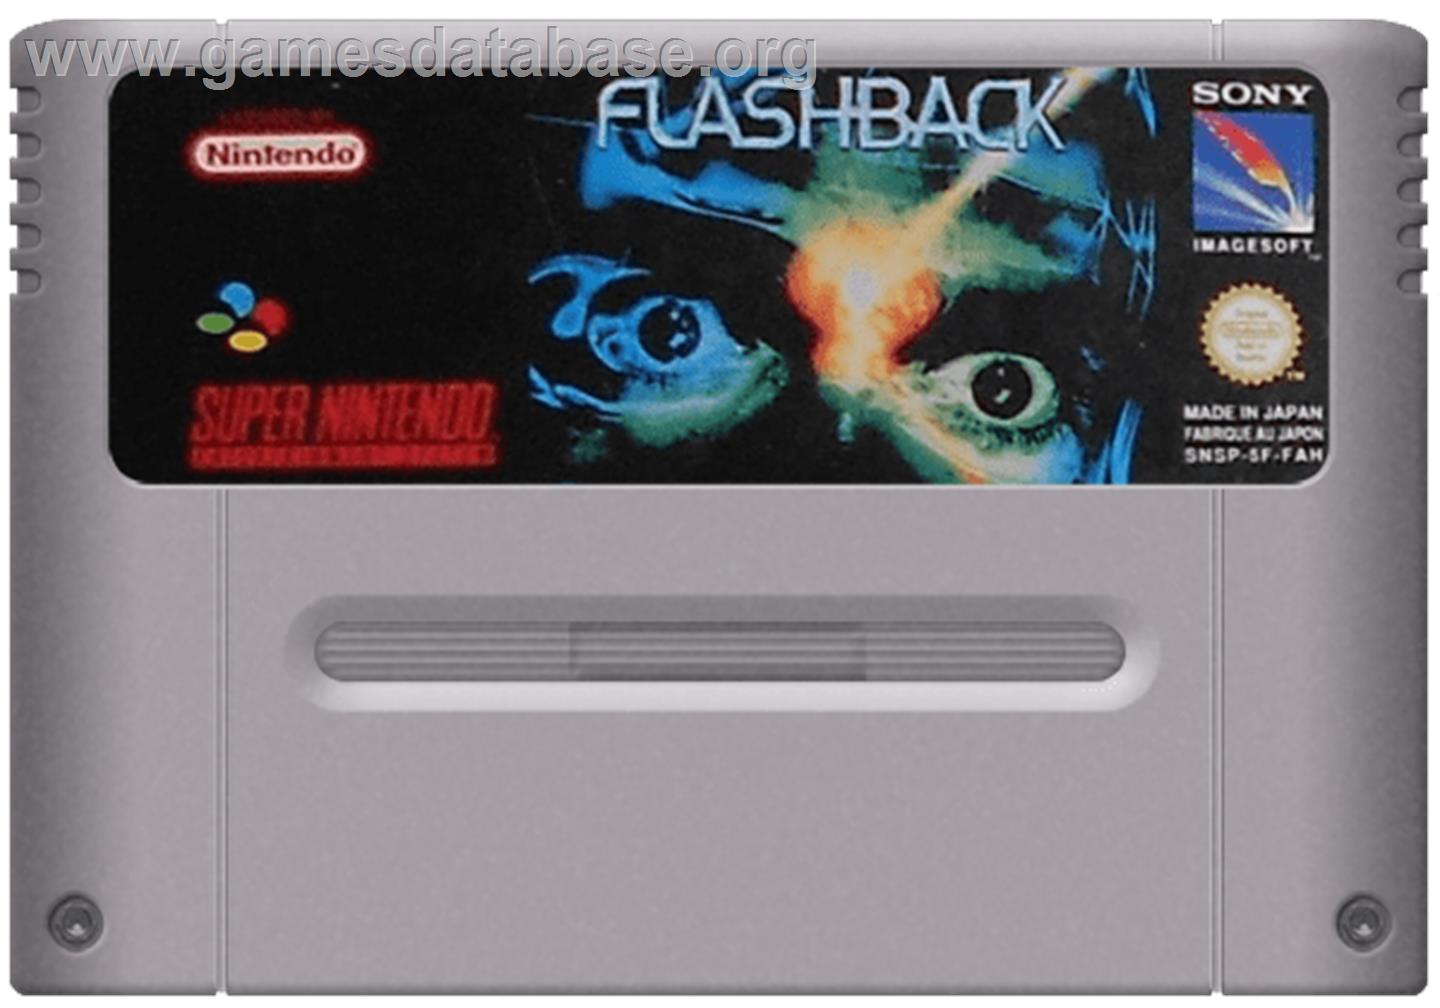 Flashback: The Quest for Identity - Nintendo SNES - Artwork - Cartridge